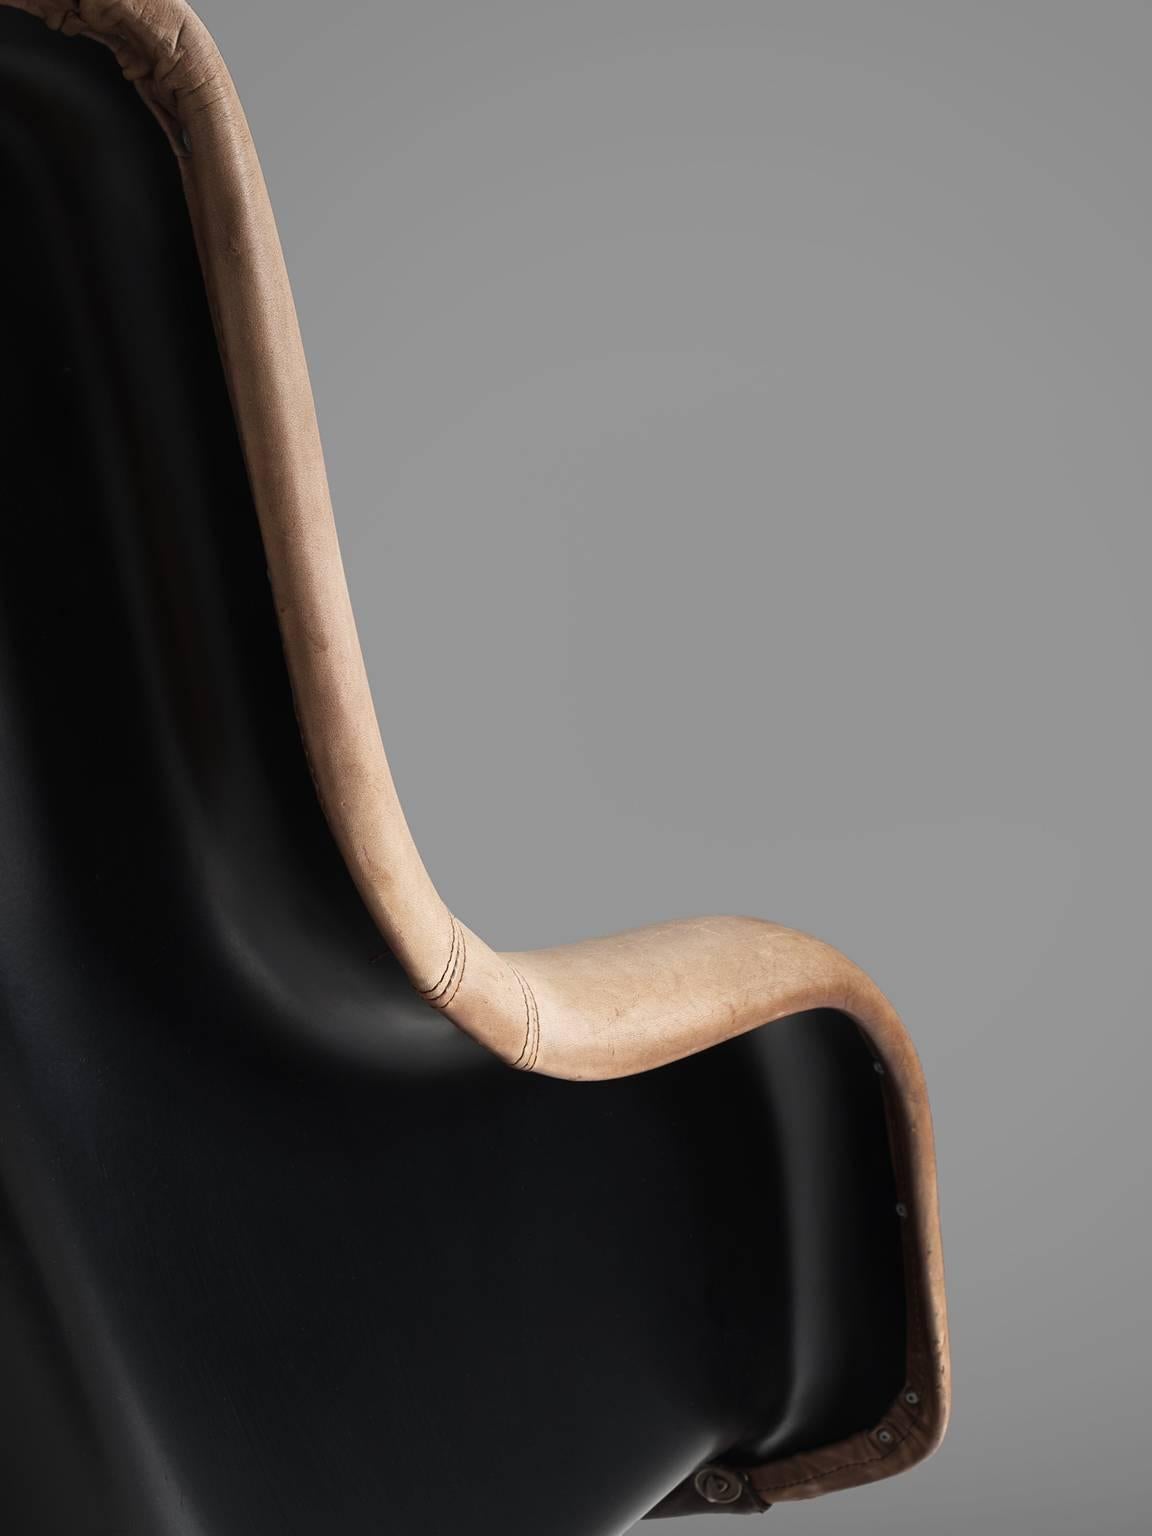 Mid-20th Century Yrjö Kukkapuro 'Karuselli' Lounge Chair in Brown Leather Upholstery